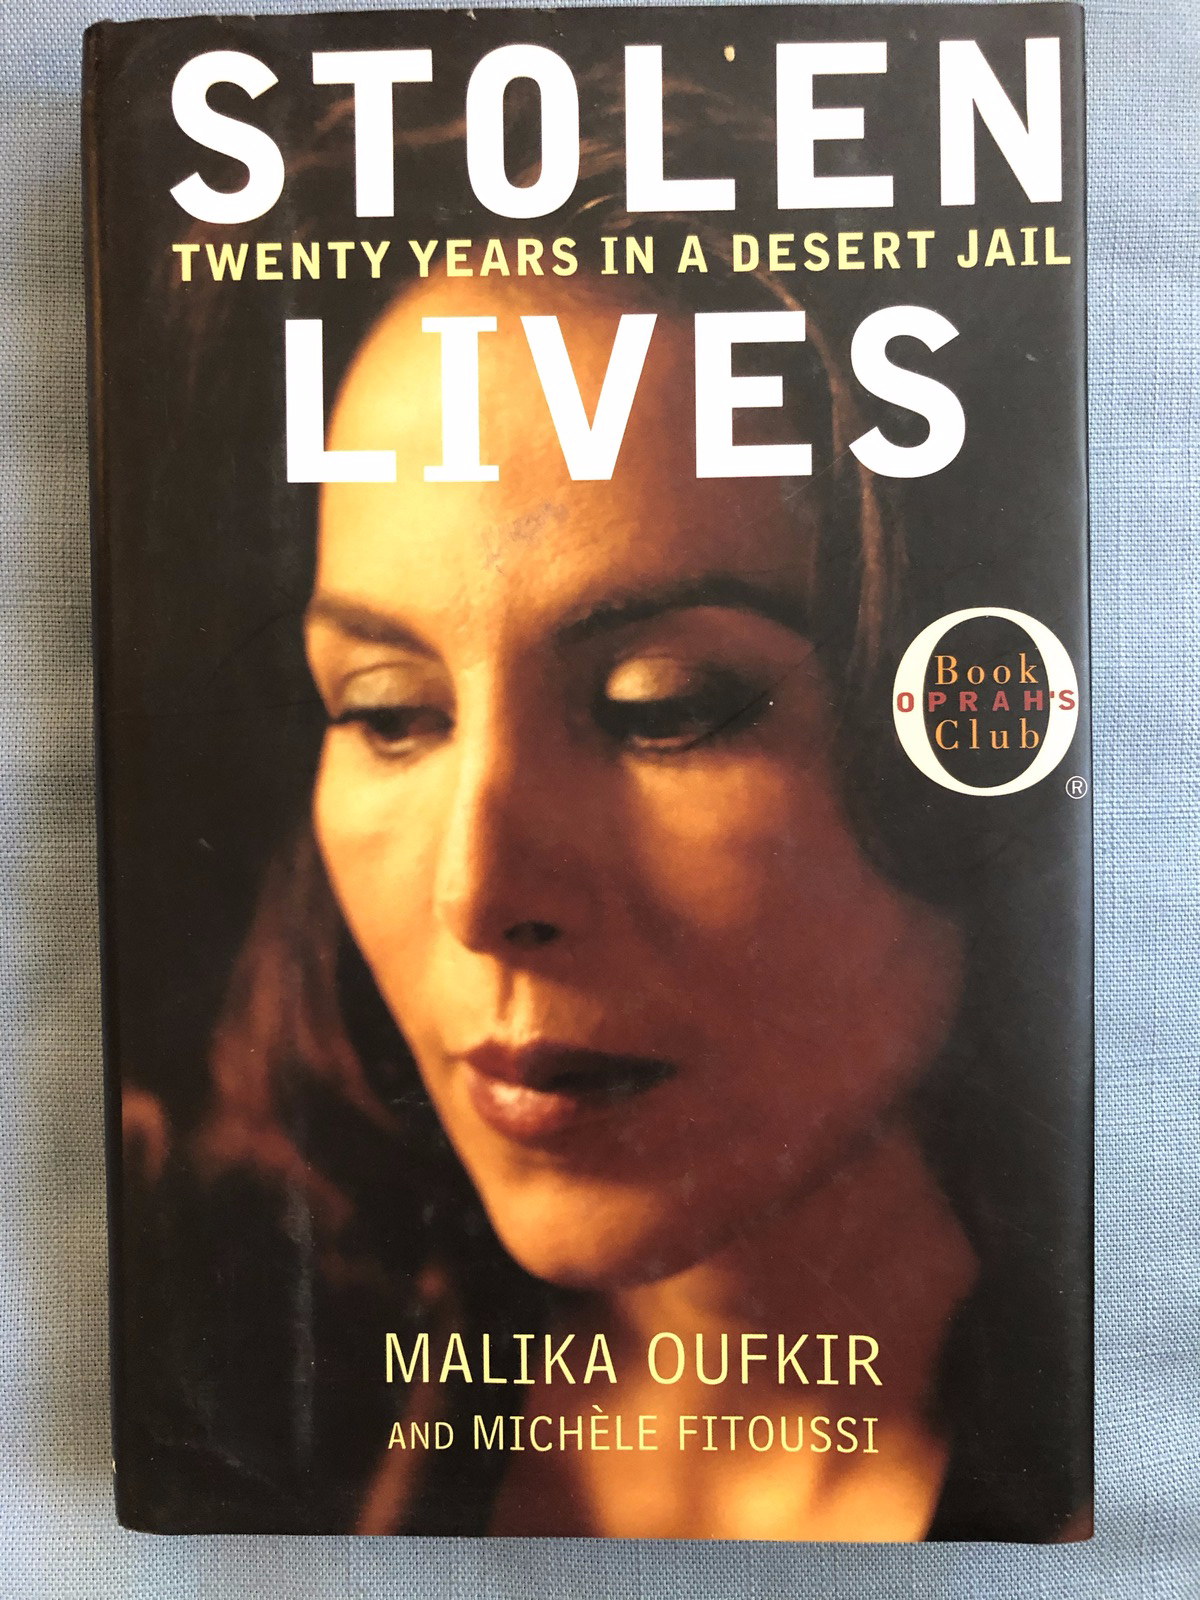 Primary image for Stolen Lives - Twenty Years In a Desert Jail  Hardcover (True Story)